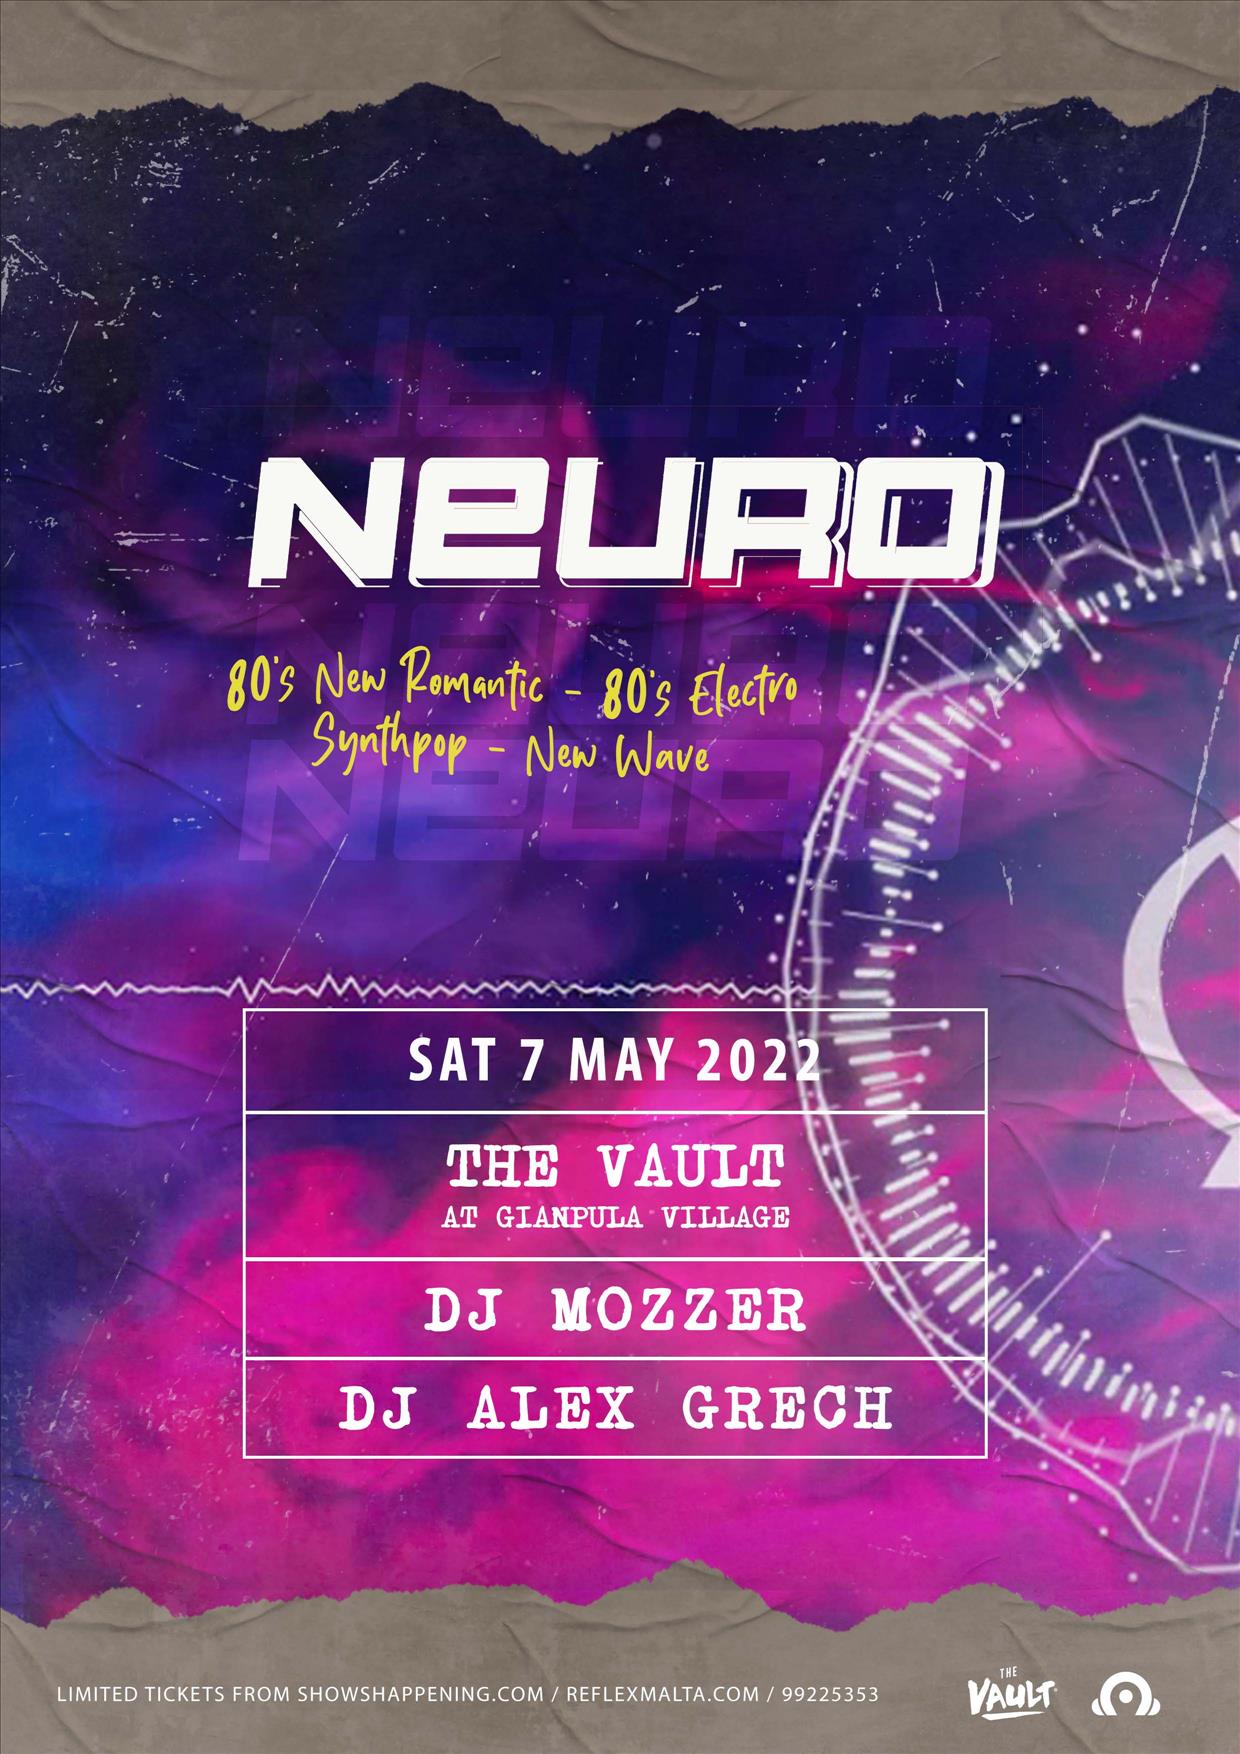 NEURO 80s poster